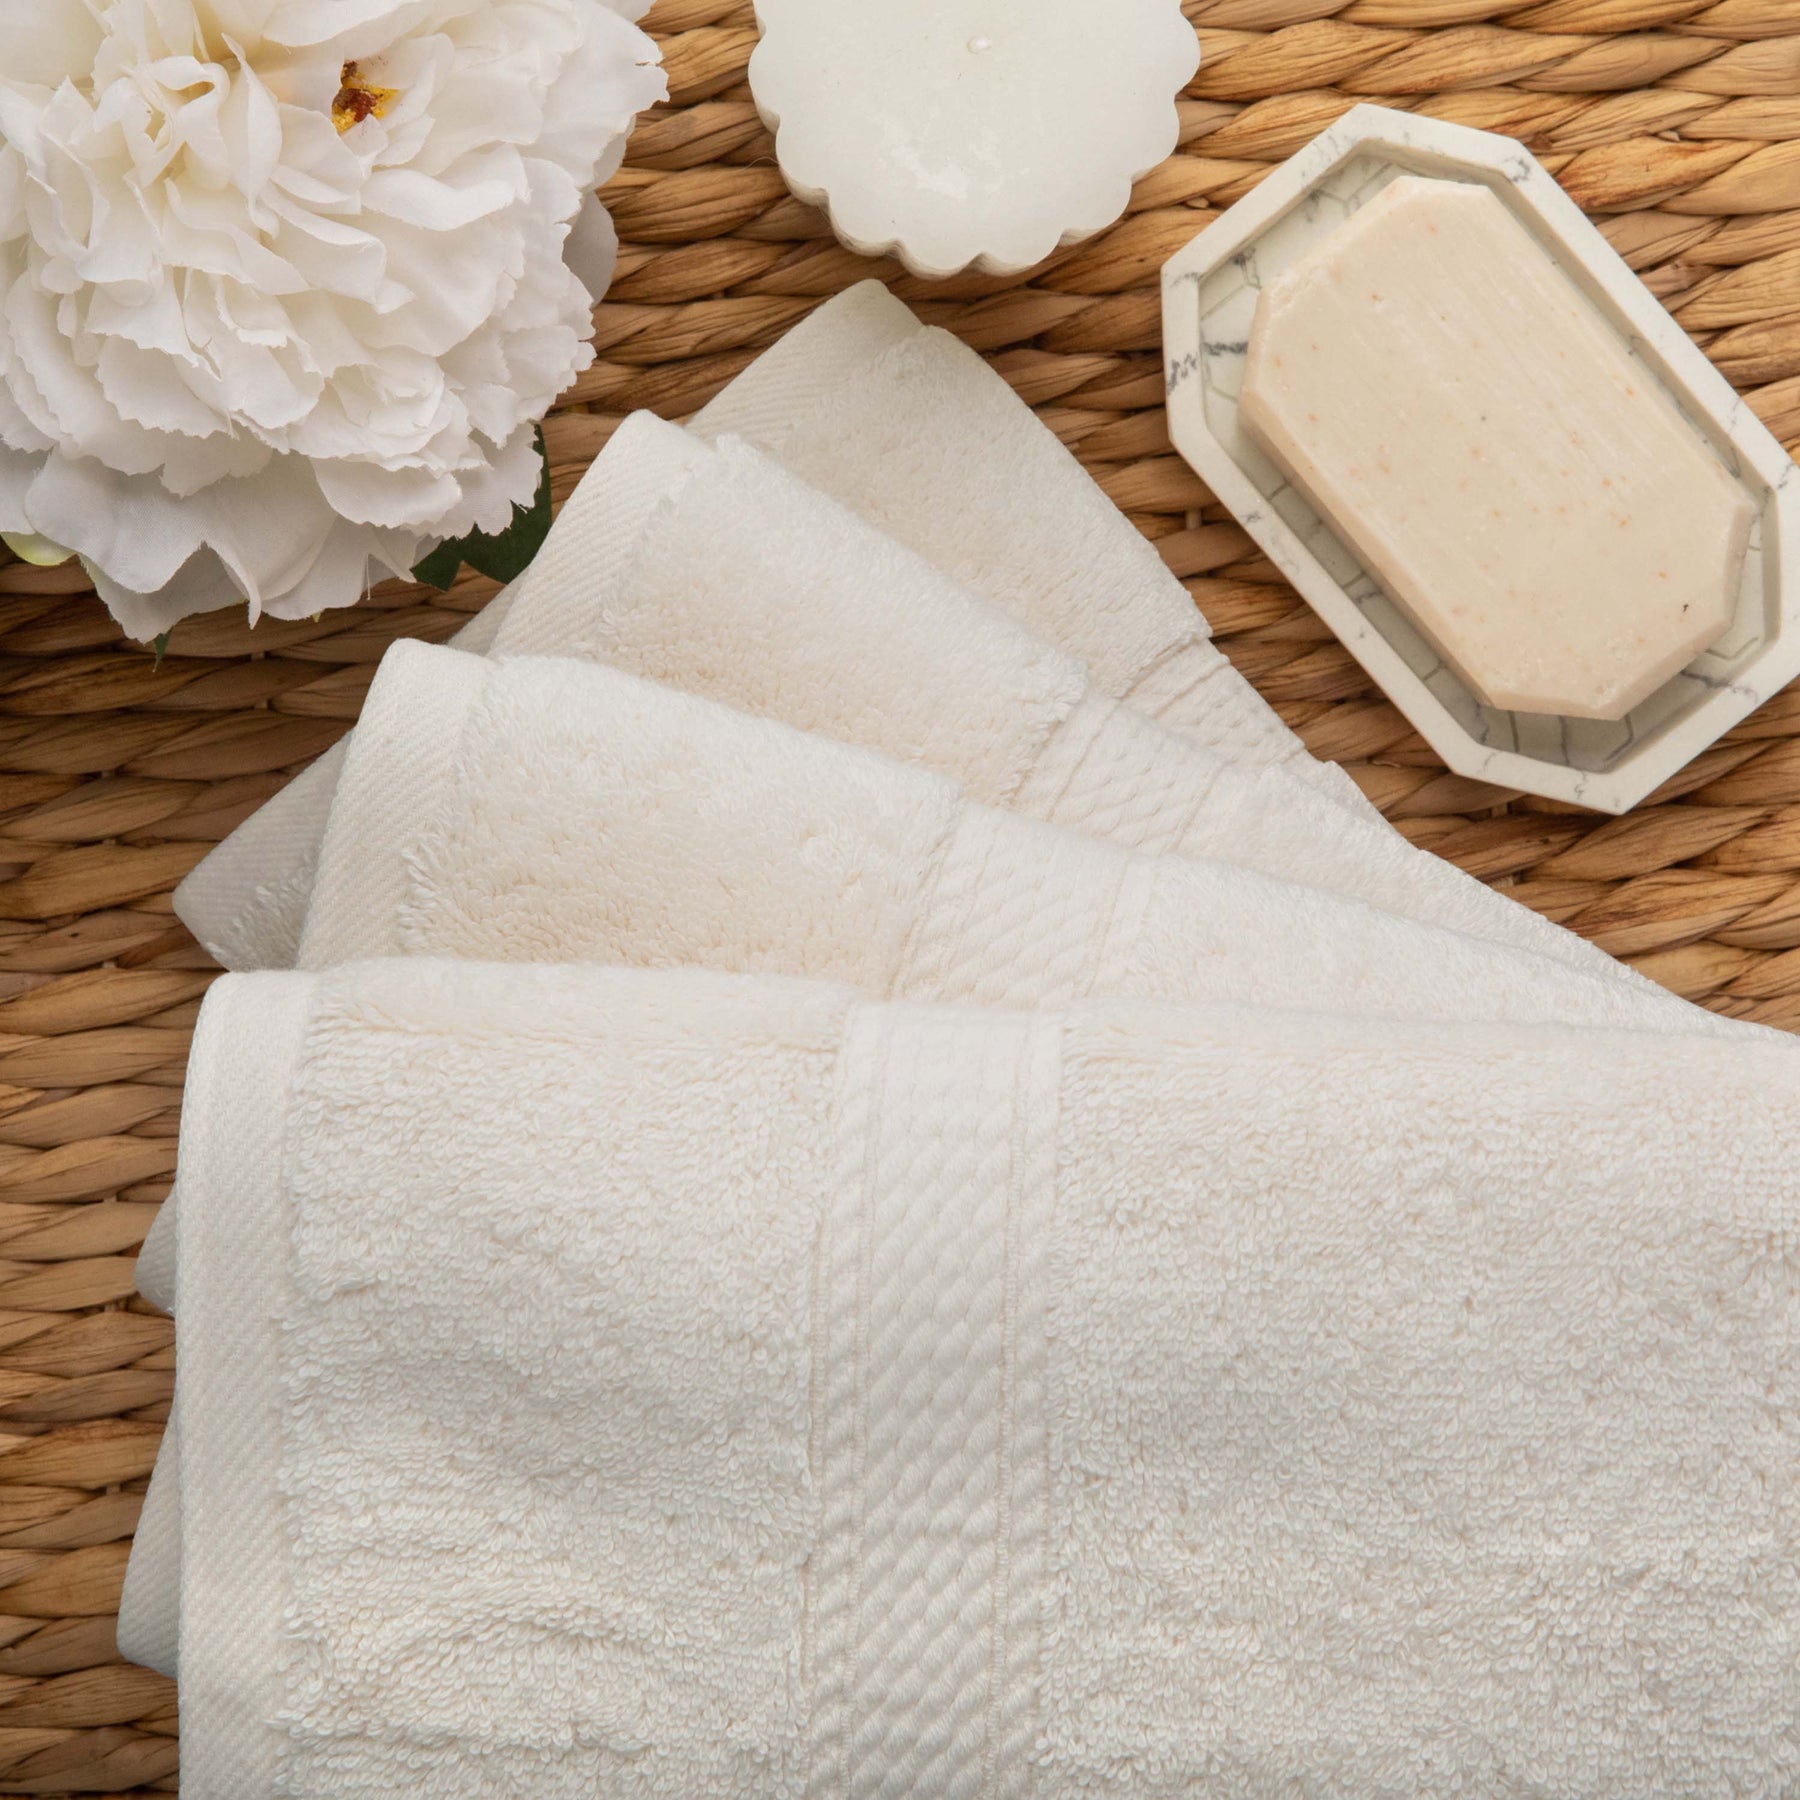 Superior Egyptian Cotton Plush Heavyweight Absorbent Luxury Soft 9-Piece Towel Set - Cream